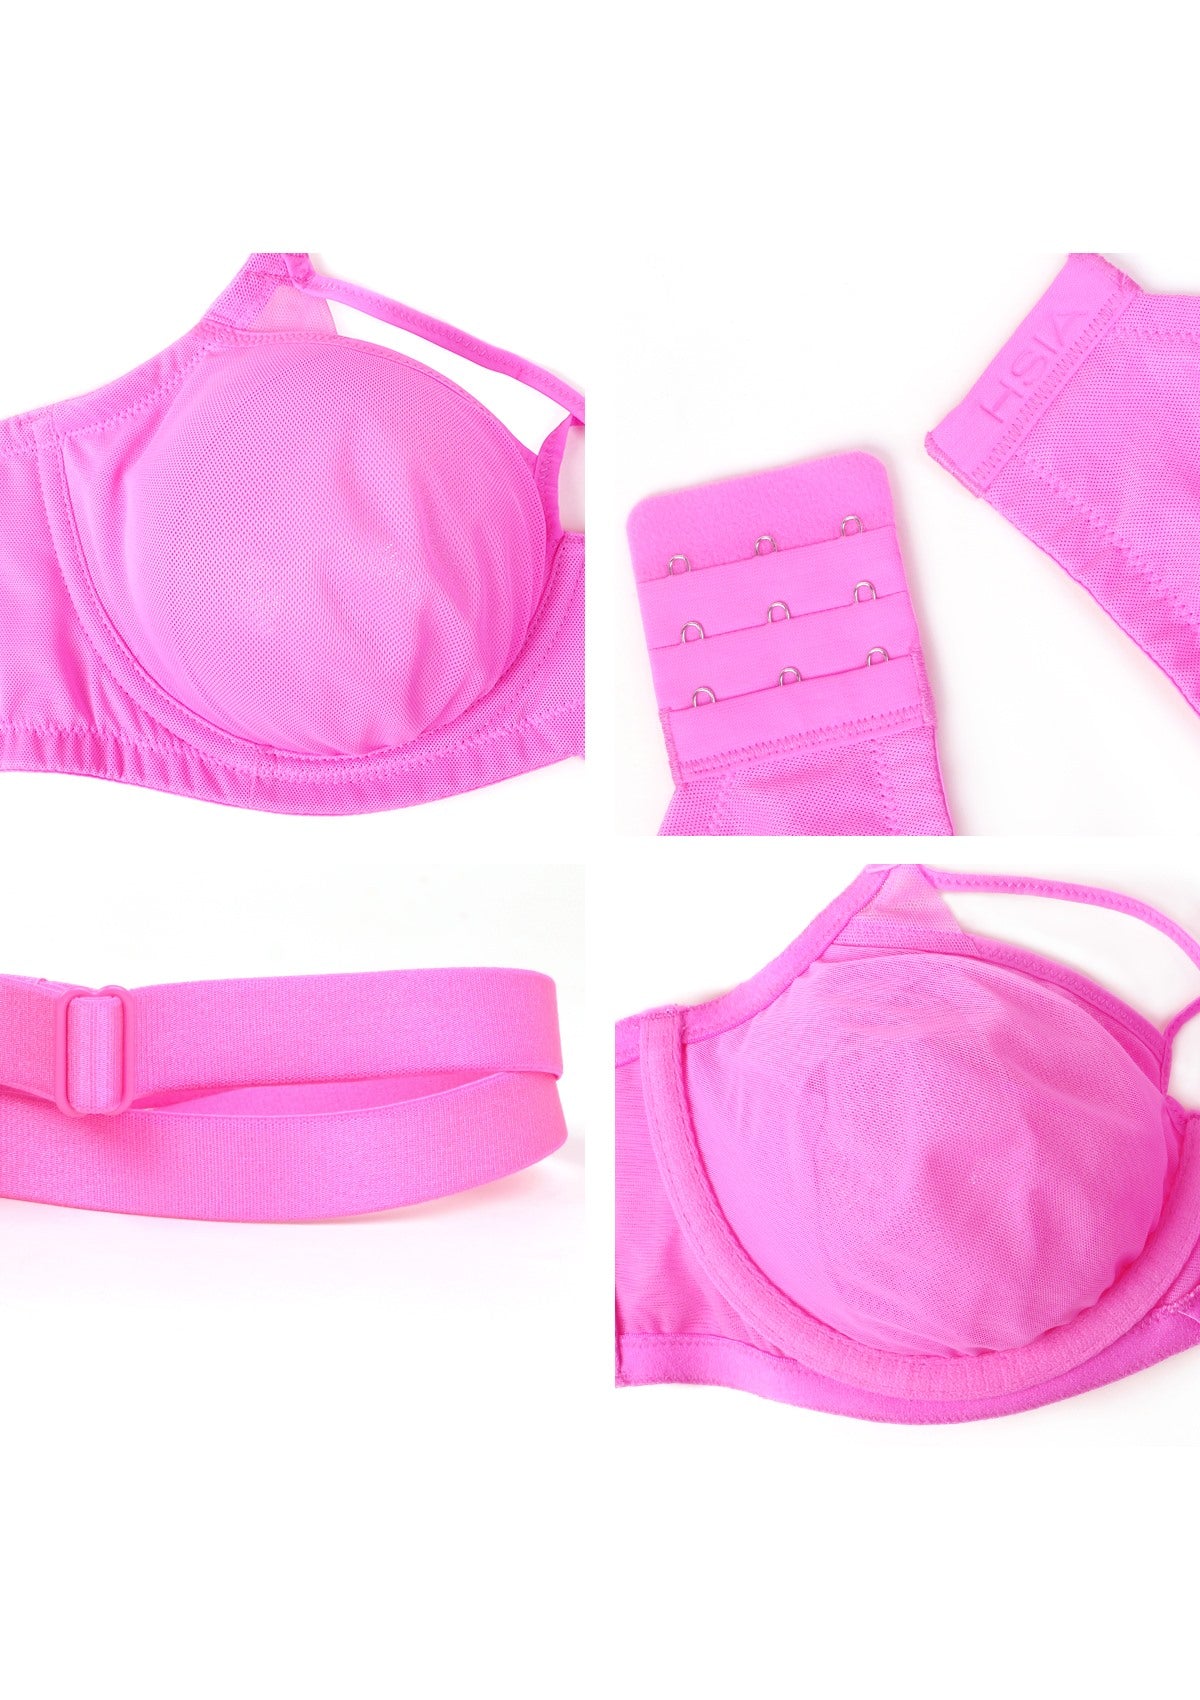 HSIA Billie Cross Front Strap Smooth Sheer Mesh Comfy Underwire Bra - Barbie Pink / 34 / DDD/F